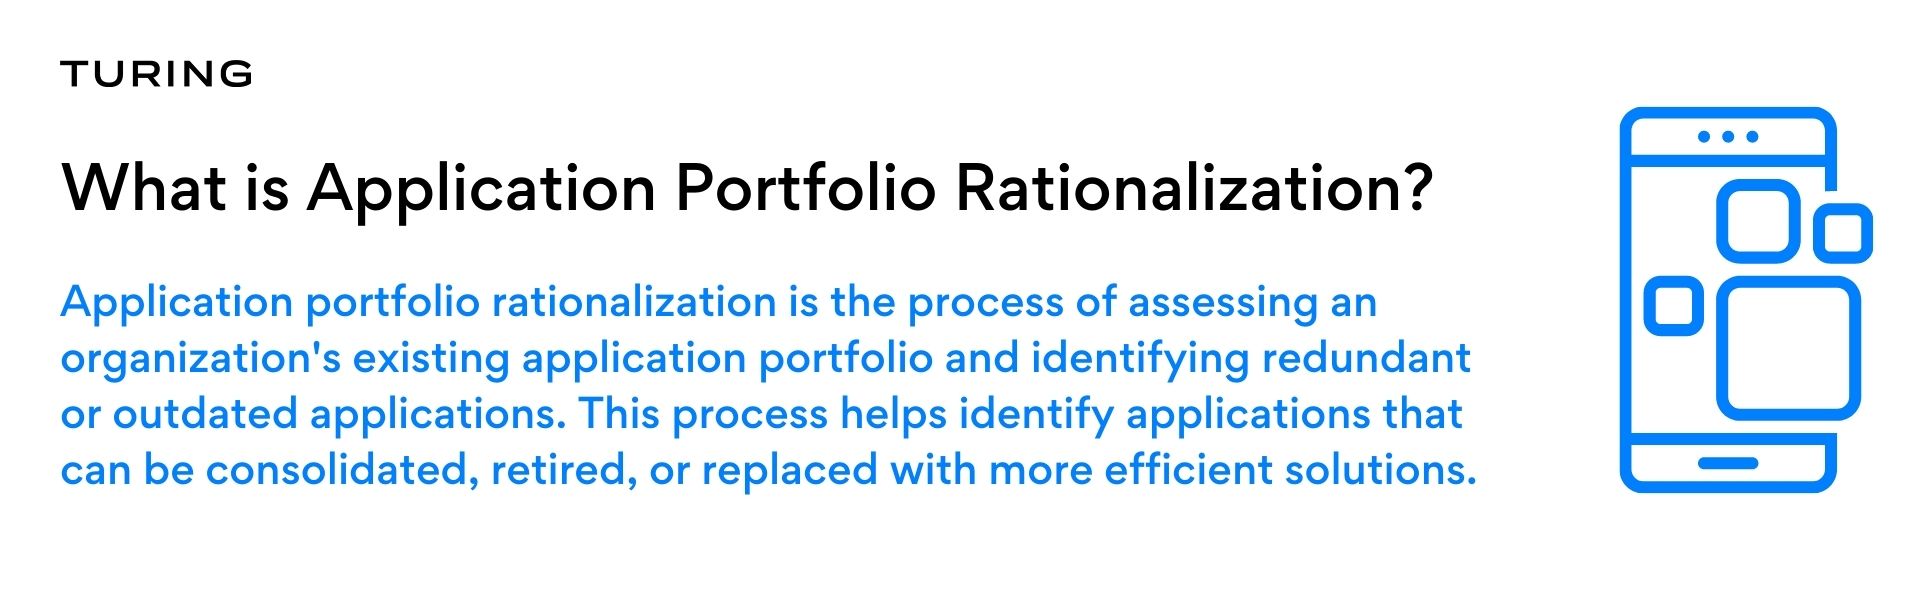 What is Application Portfolio Rationalization